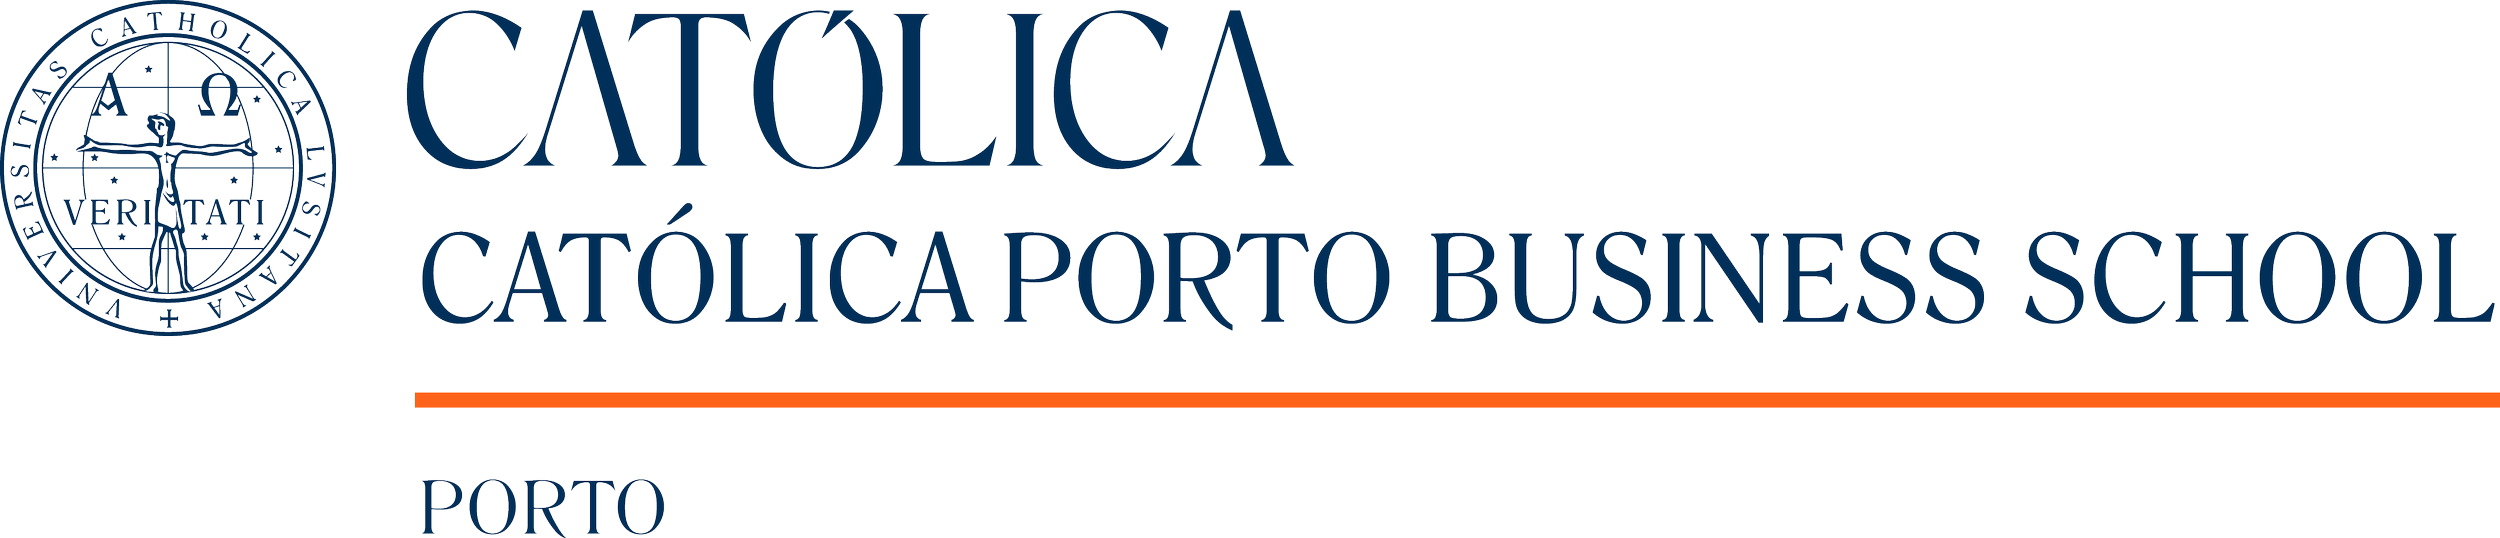 catolica porto business school.png